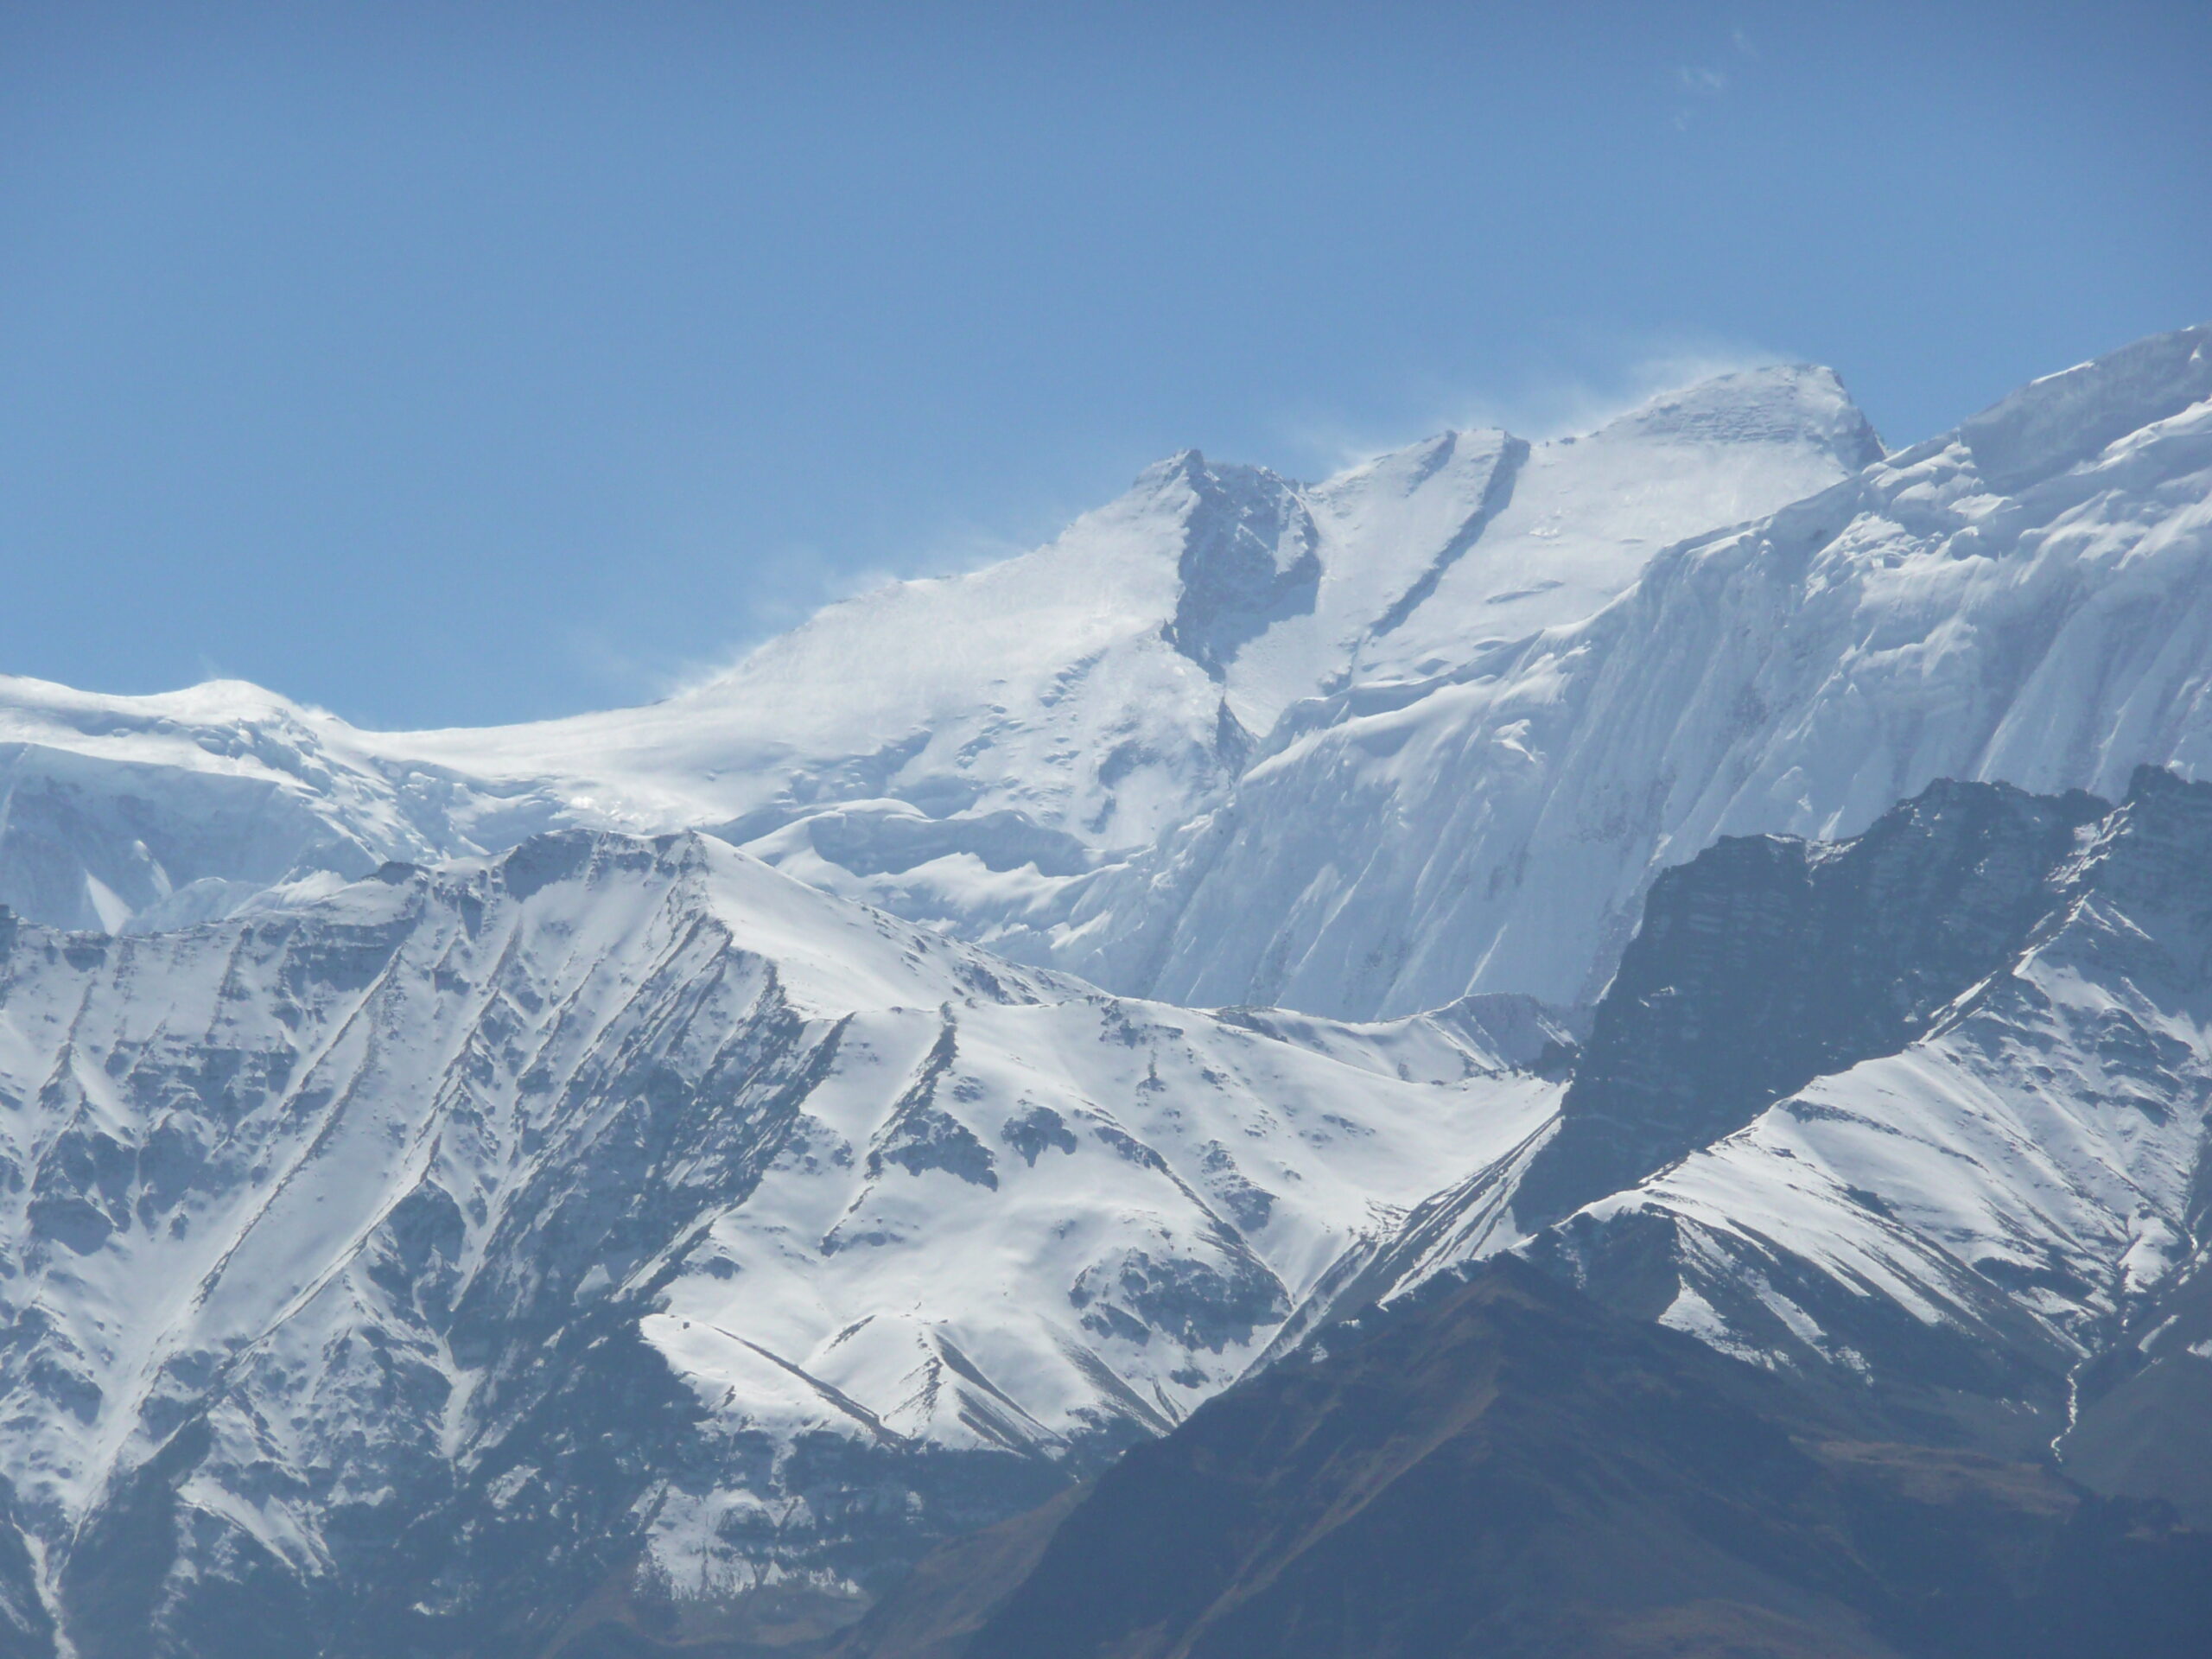 Nepal Fair step trekking- the Himalayan range that can be seen from Helambu